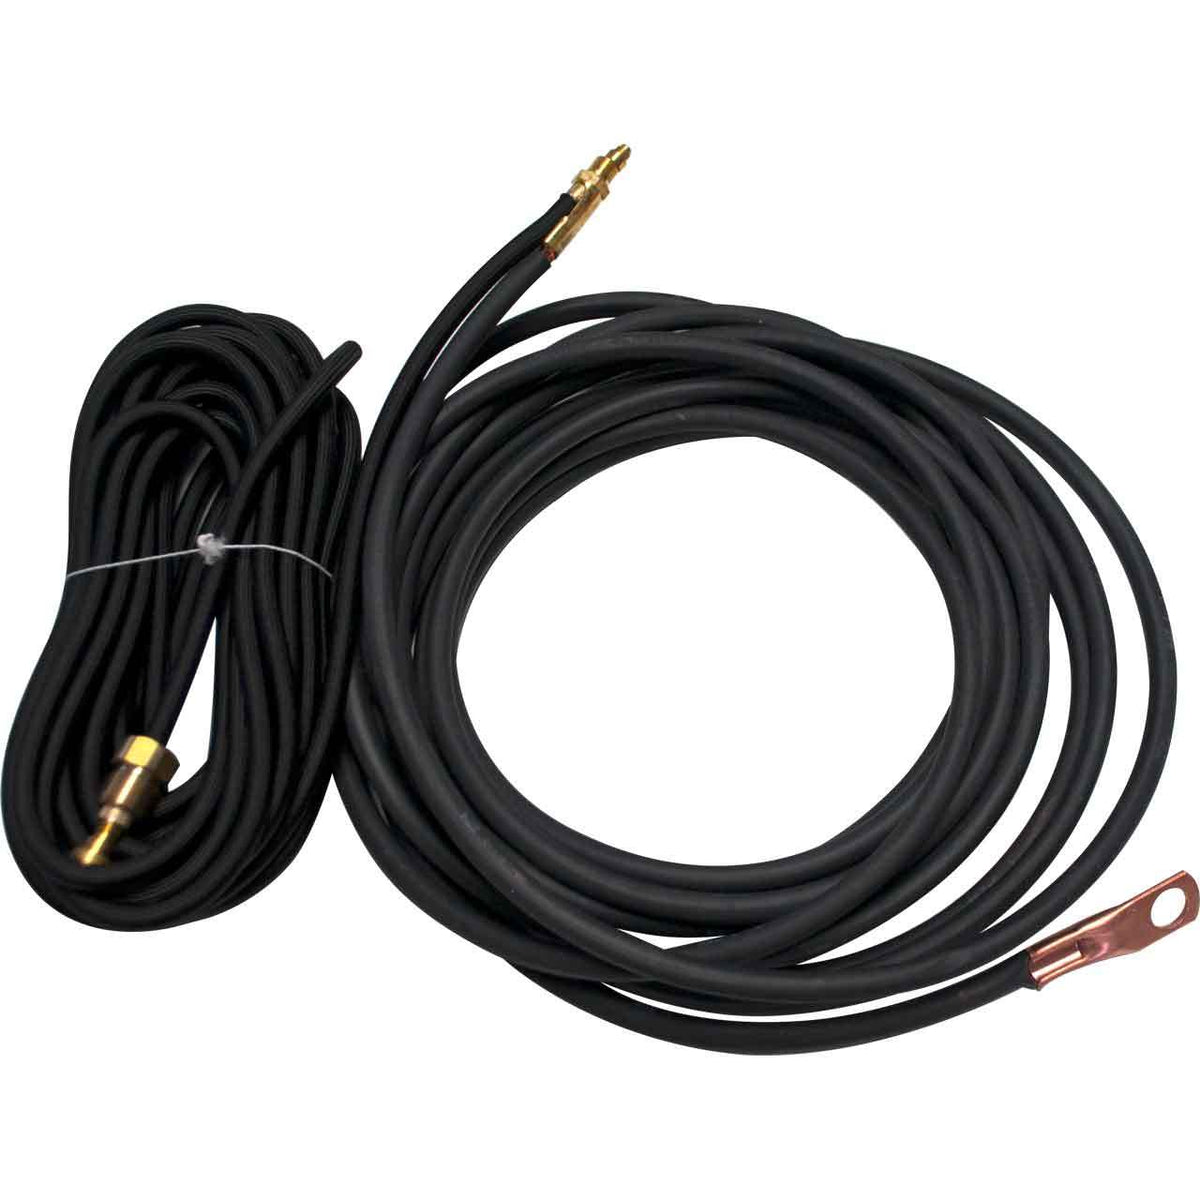 57Y01-2SF 57Y03-2SF CK Worldwide Cables